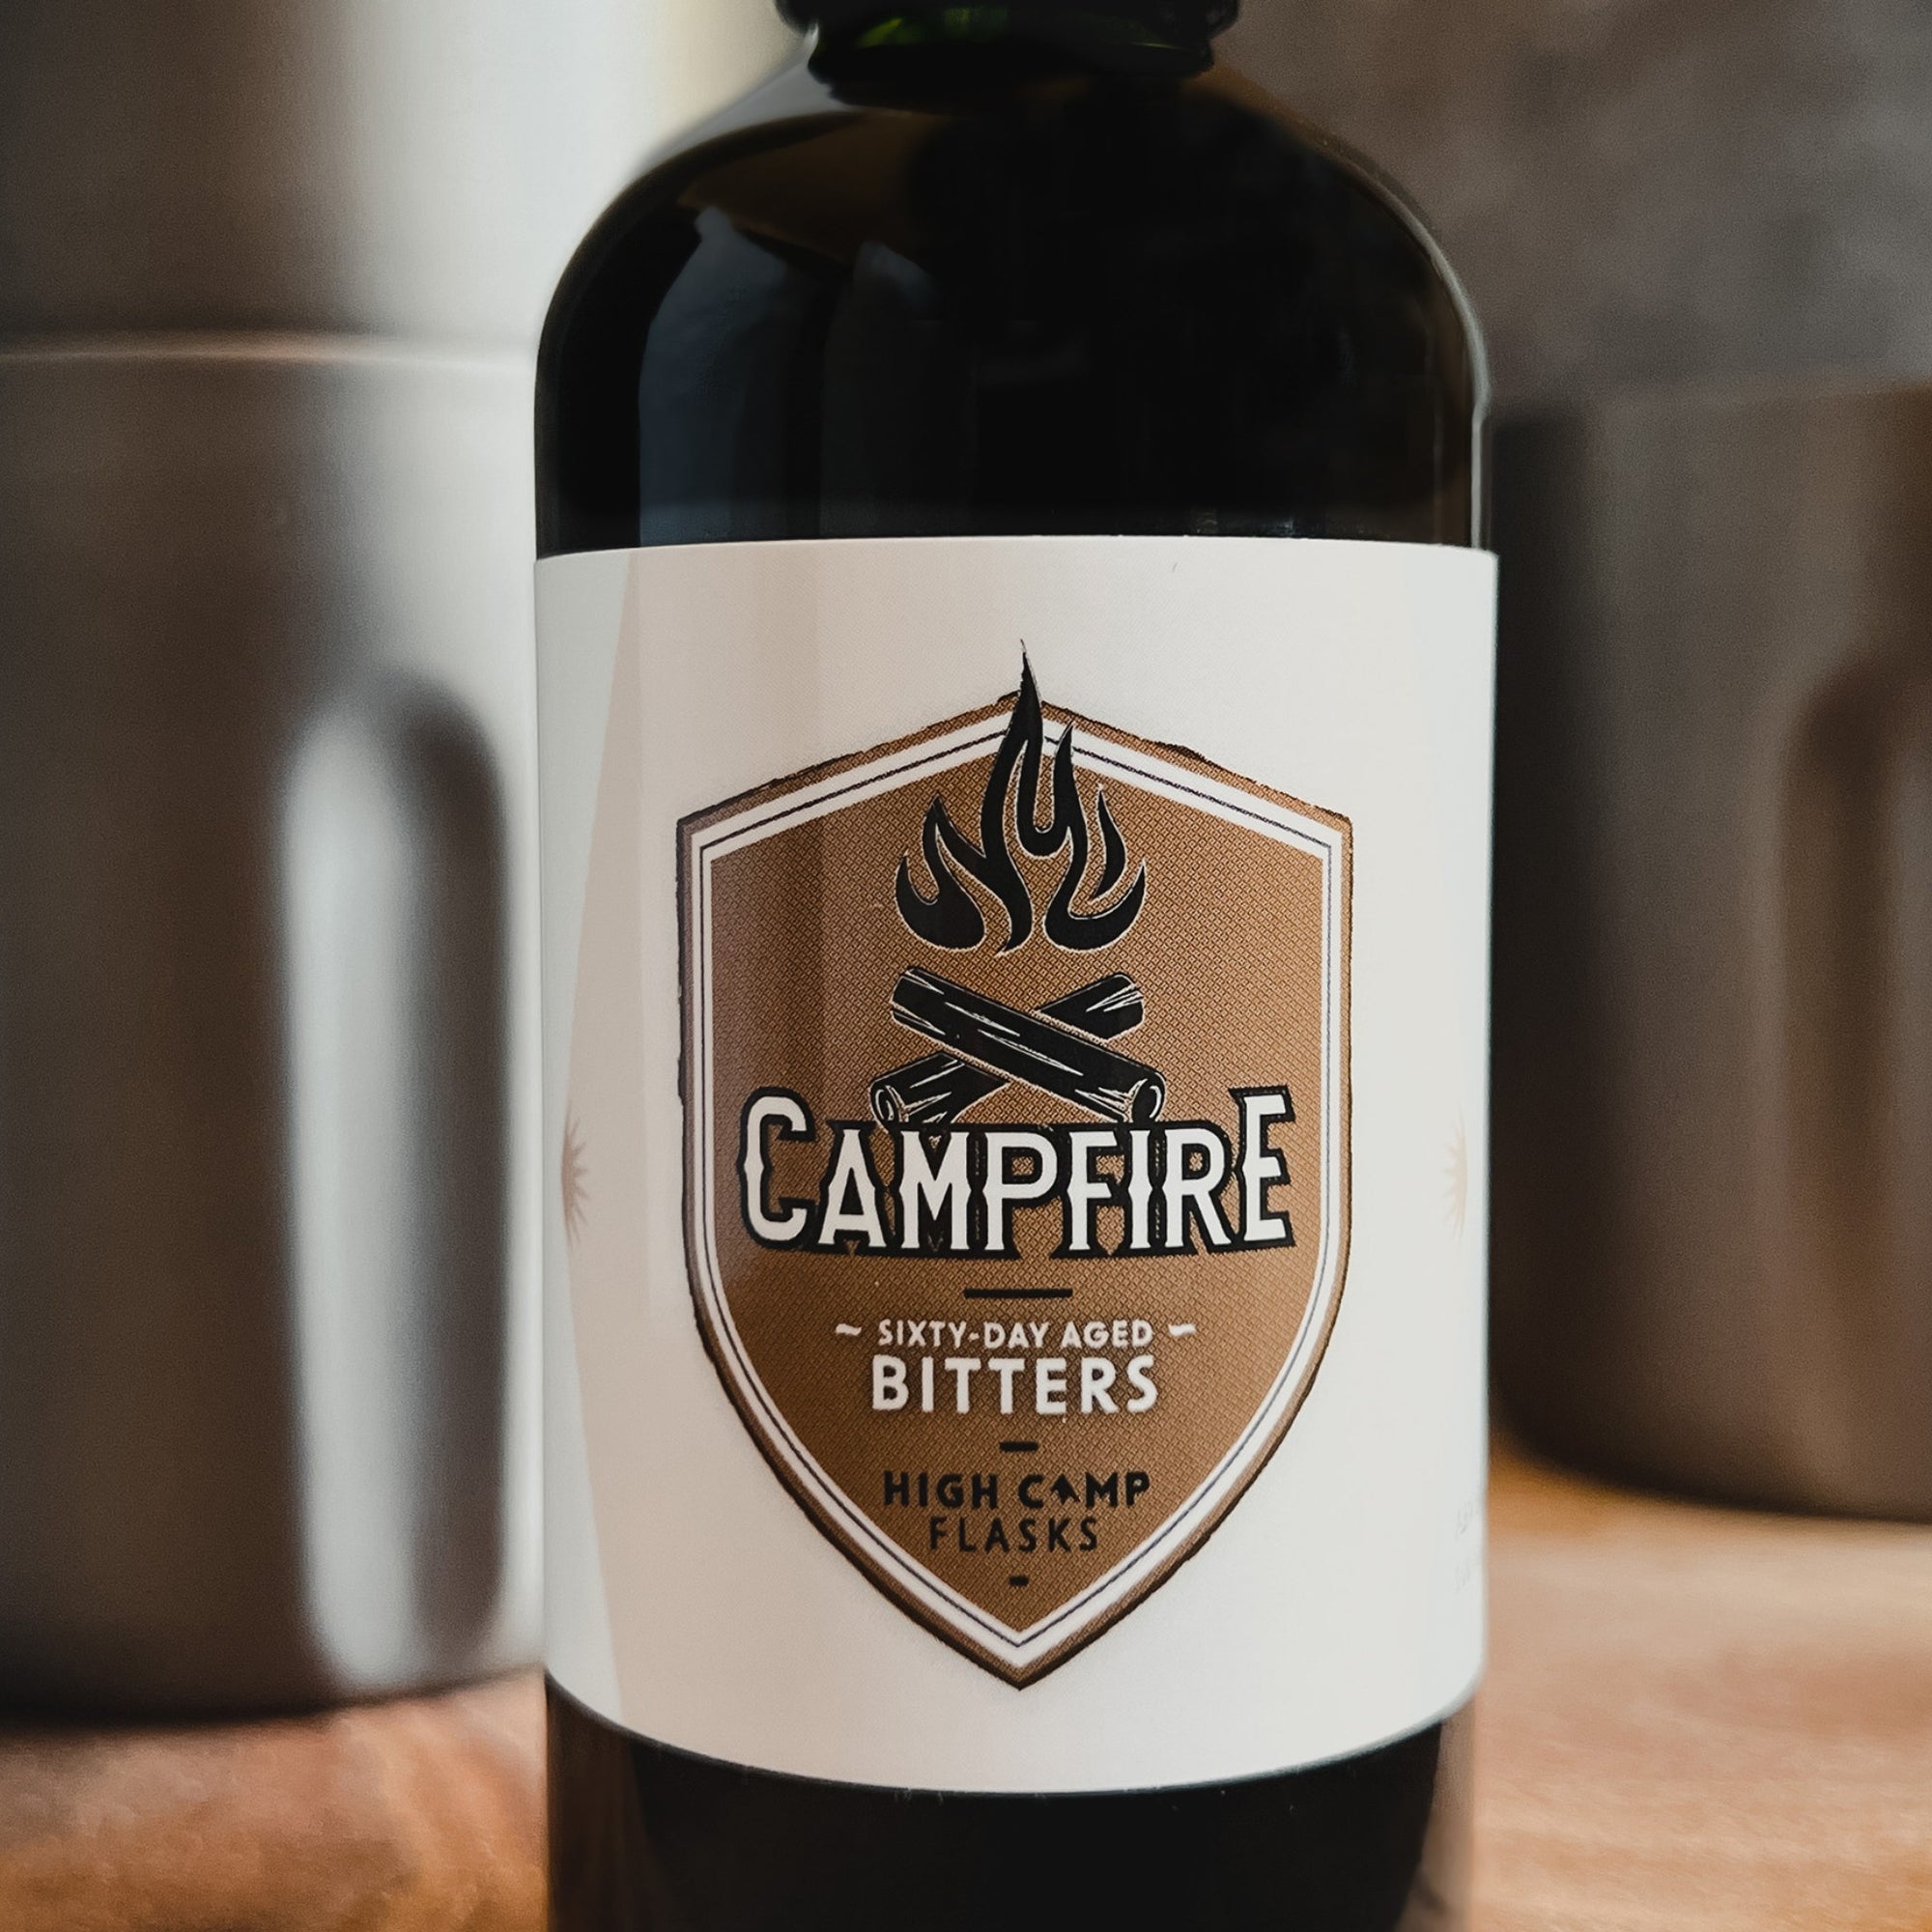 Campfire Bitters